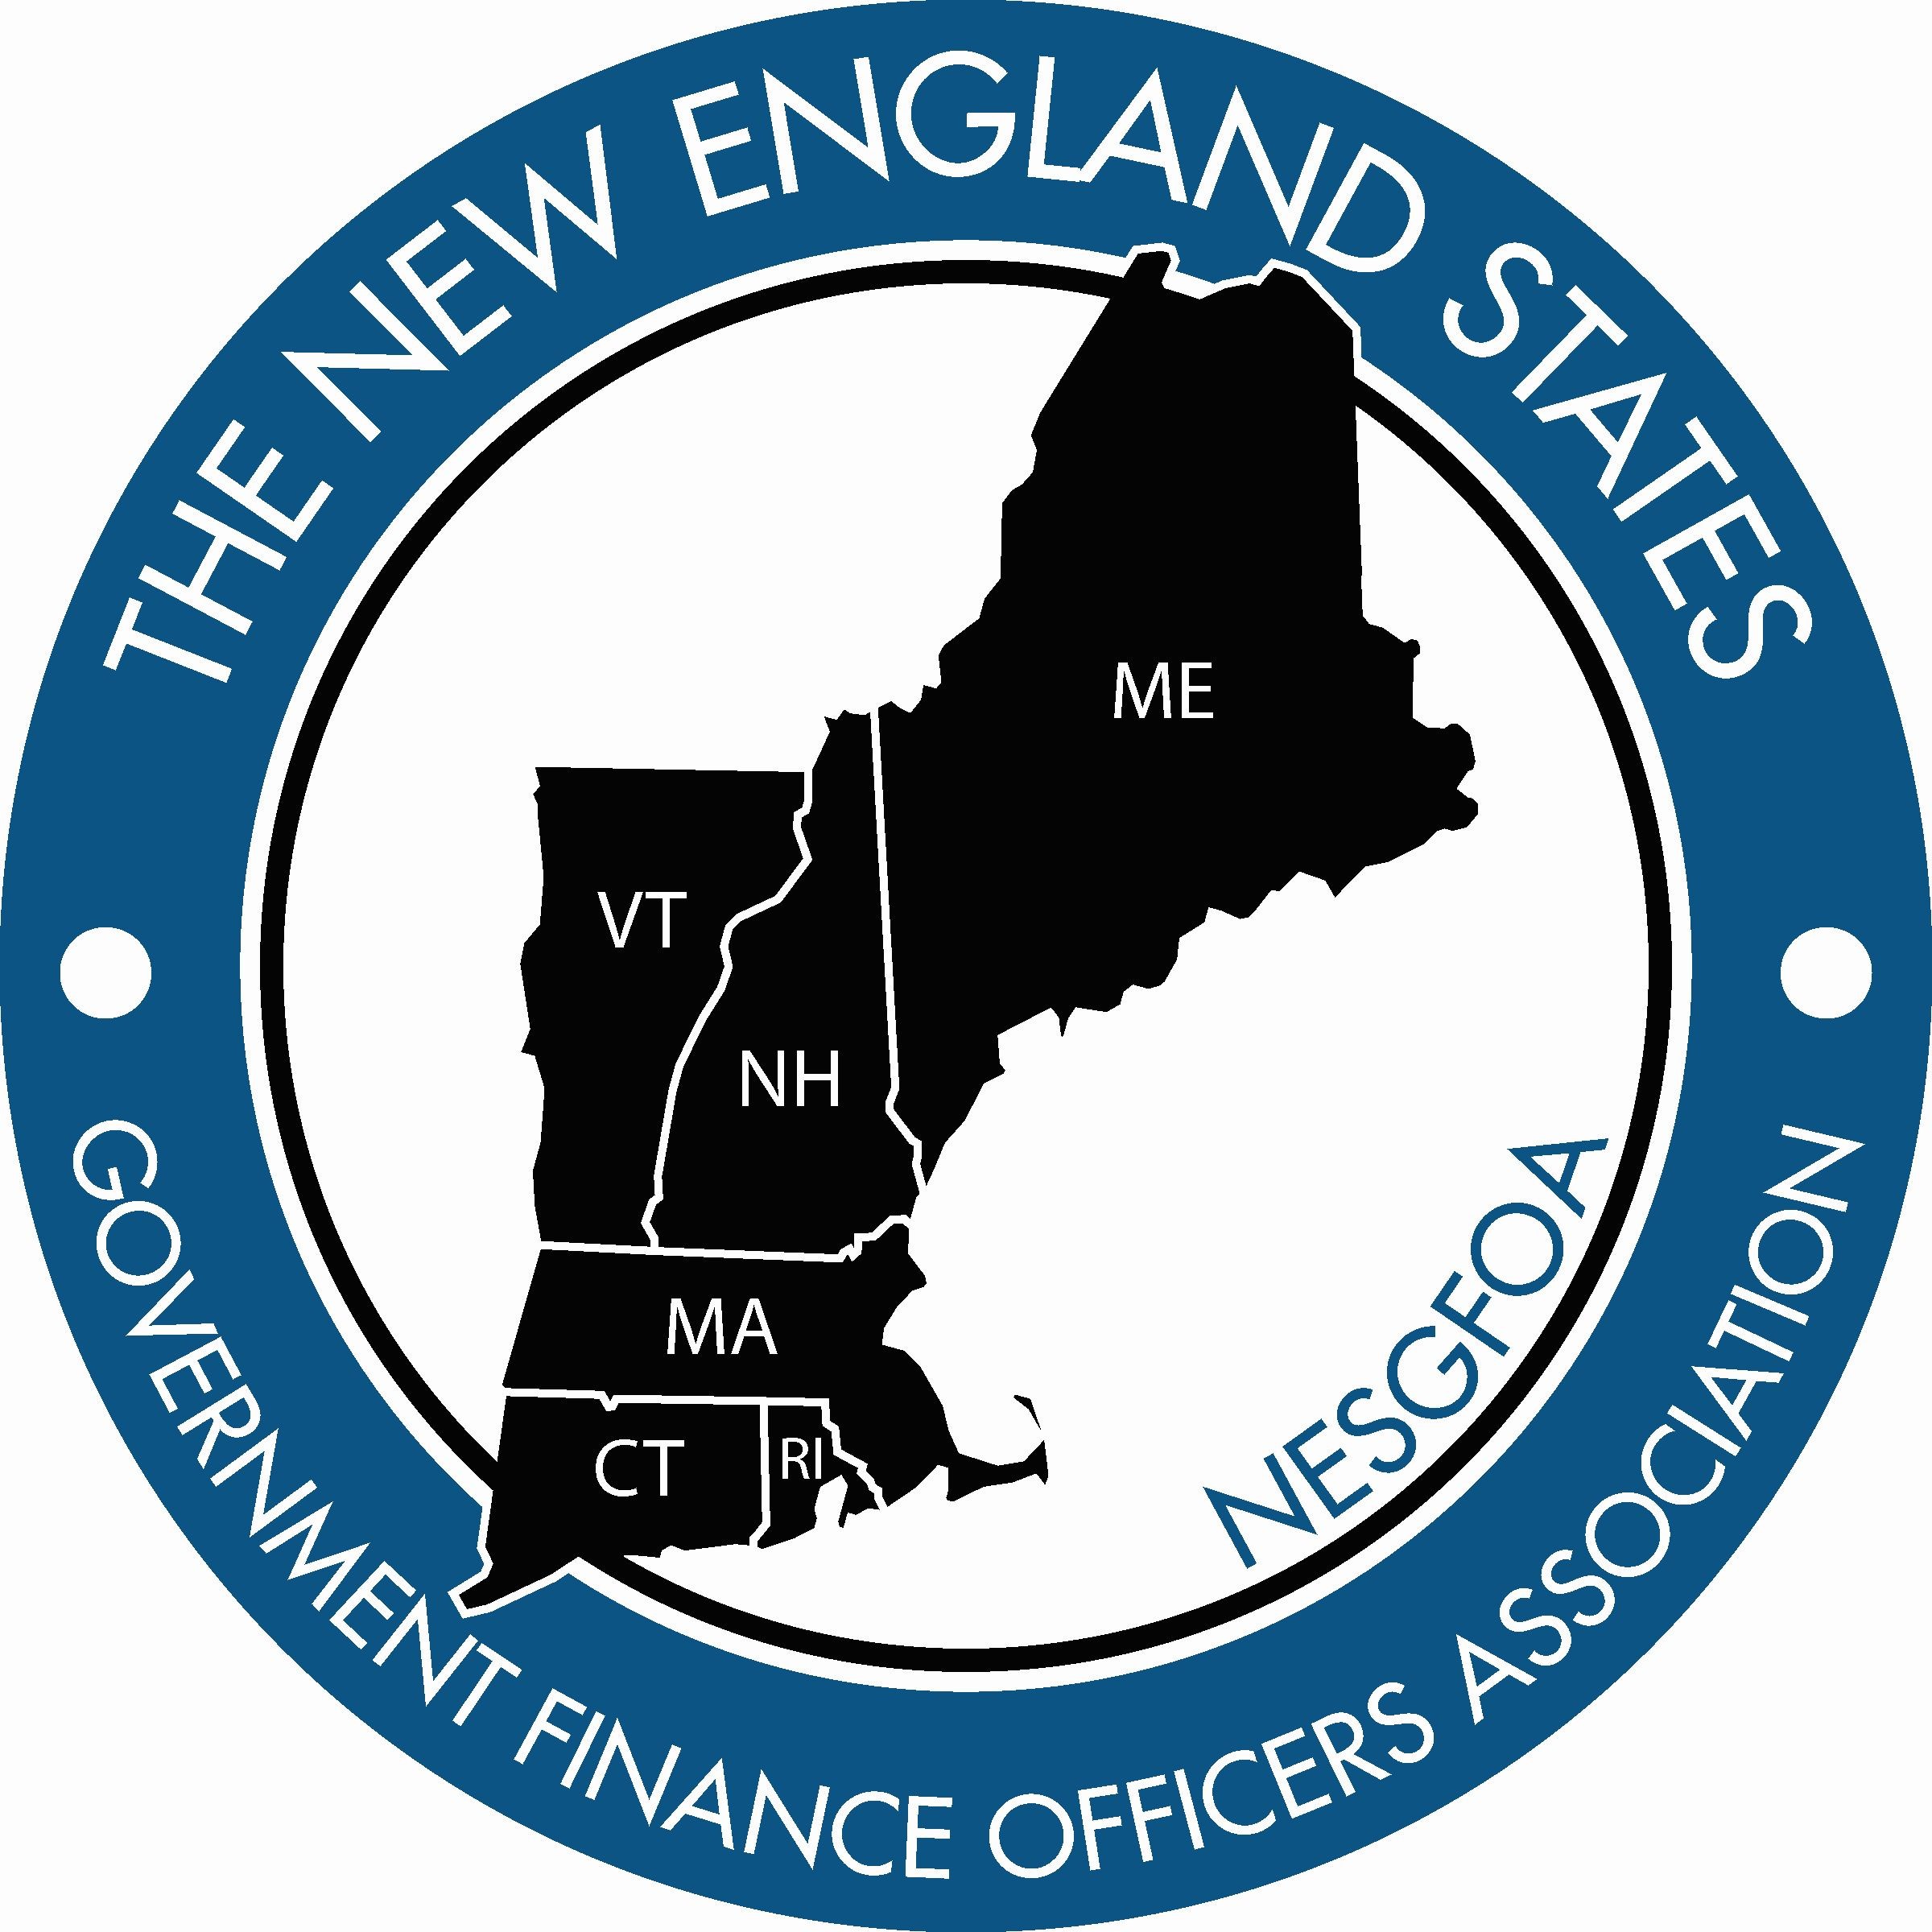 New England States GFOA Annual Fall Conference